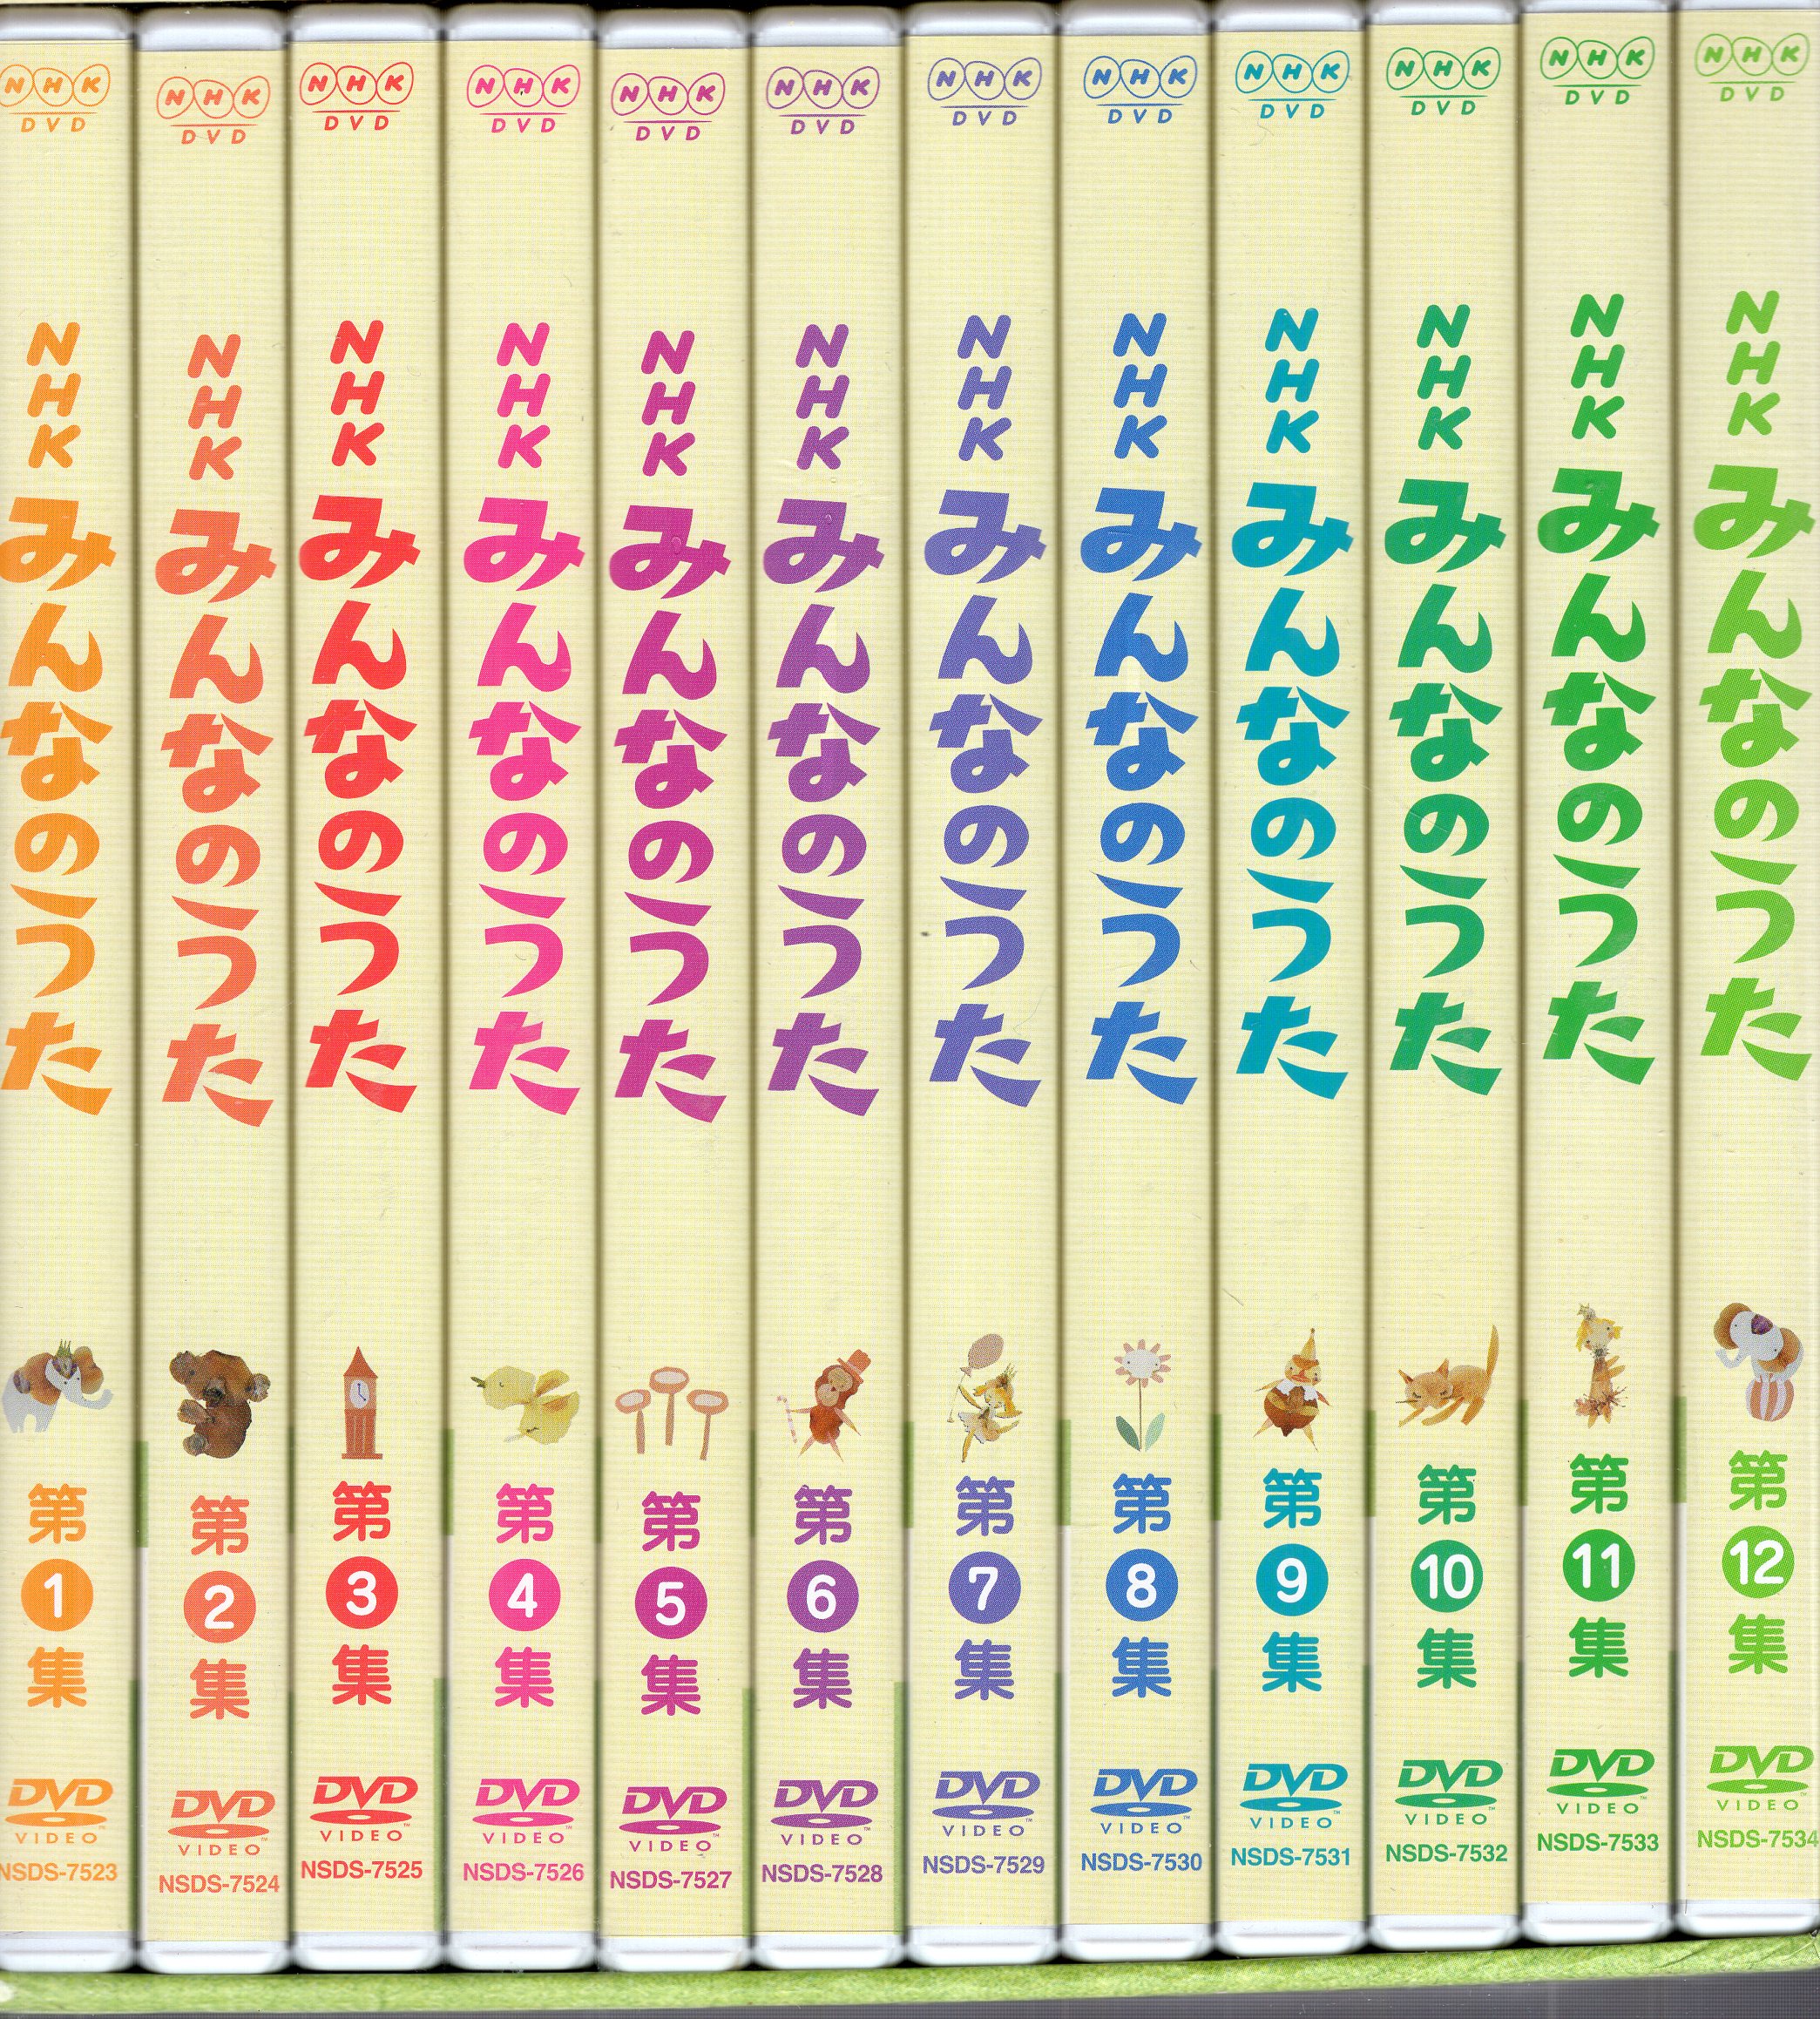 NHKエンタープライズ アニメDVD 再販)NHKみんなのうた DVD-BOX